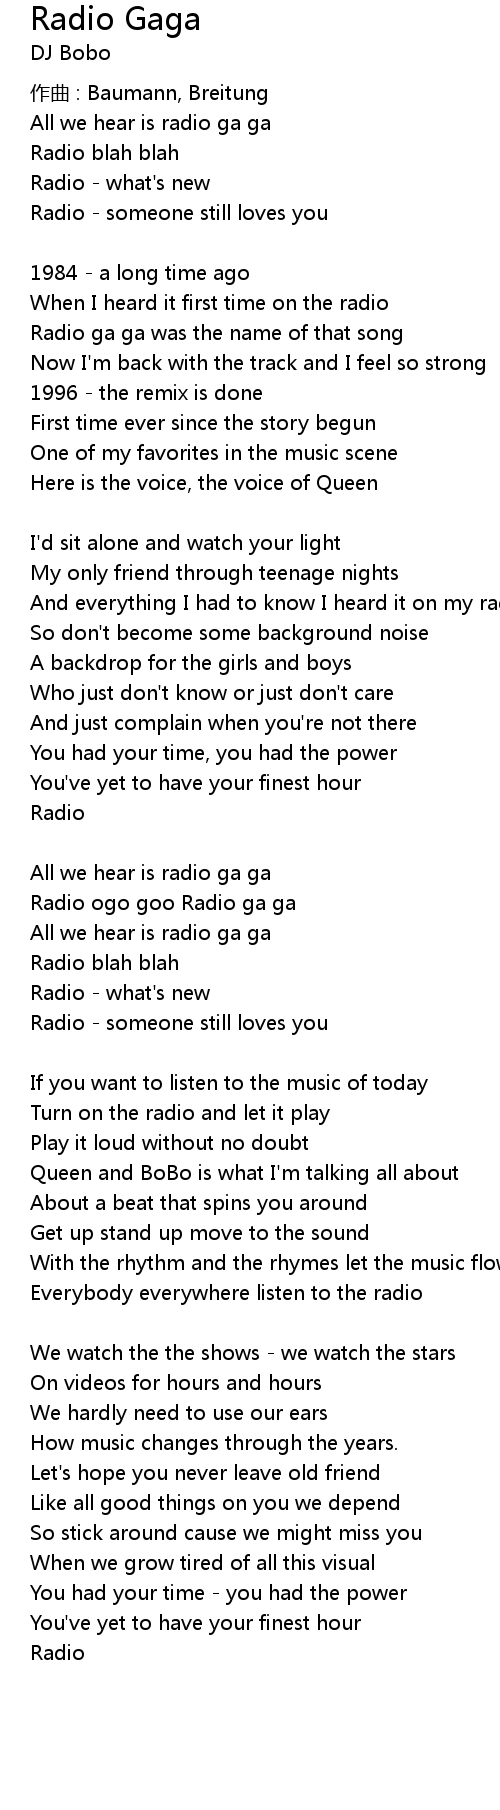 Radio Ga Ga - Queen dance traxx feat. DJ BoBo - song and lyrics by DJ BoBo